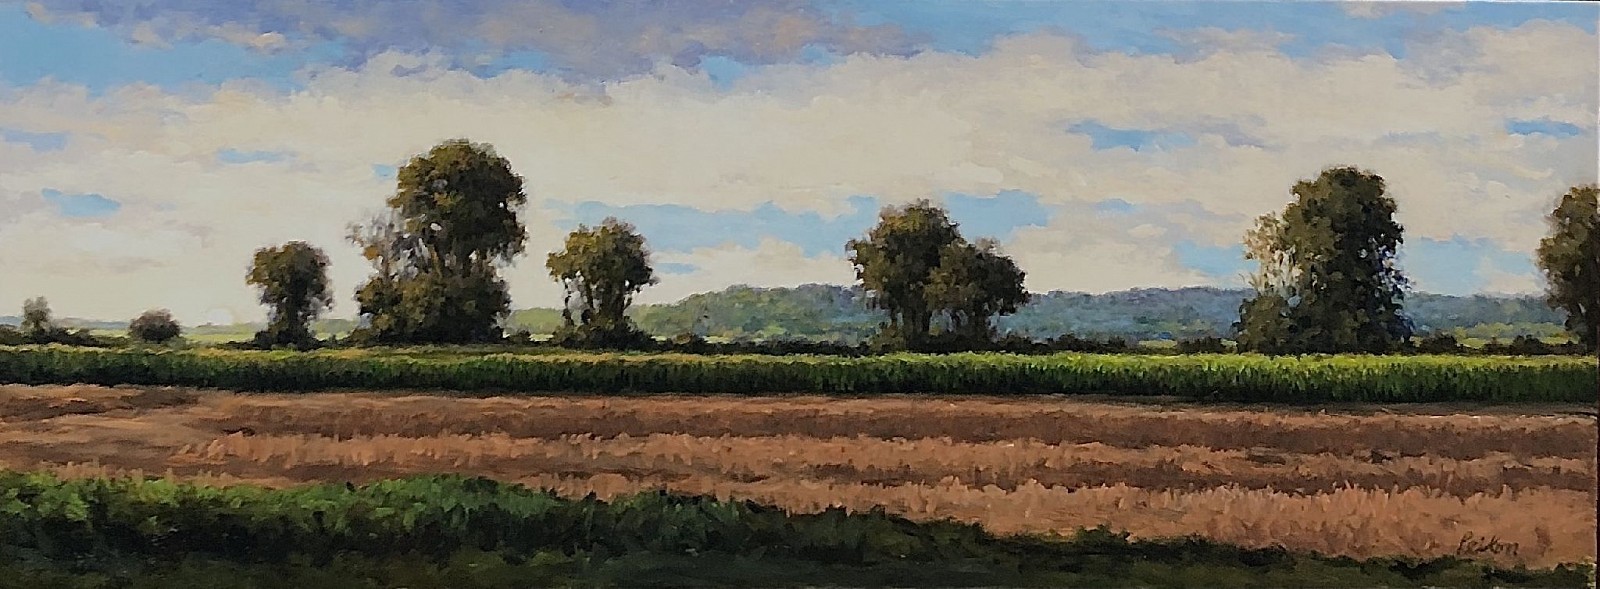 David Peikon, Sunrise, Fall Field, 2020
oil on panel, 9 x 24 in. (22.9 x 61 cm)
DP201108